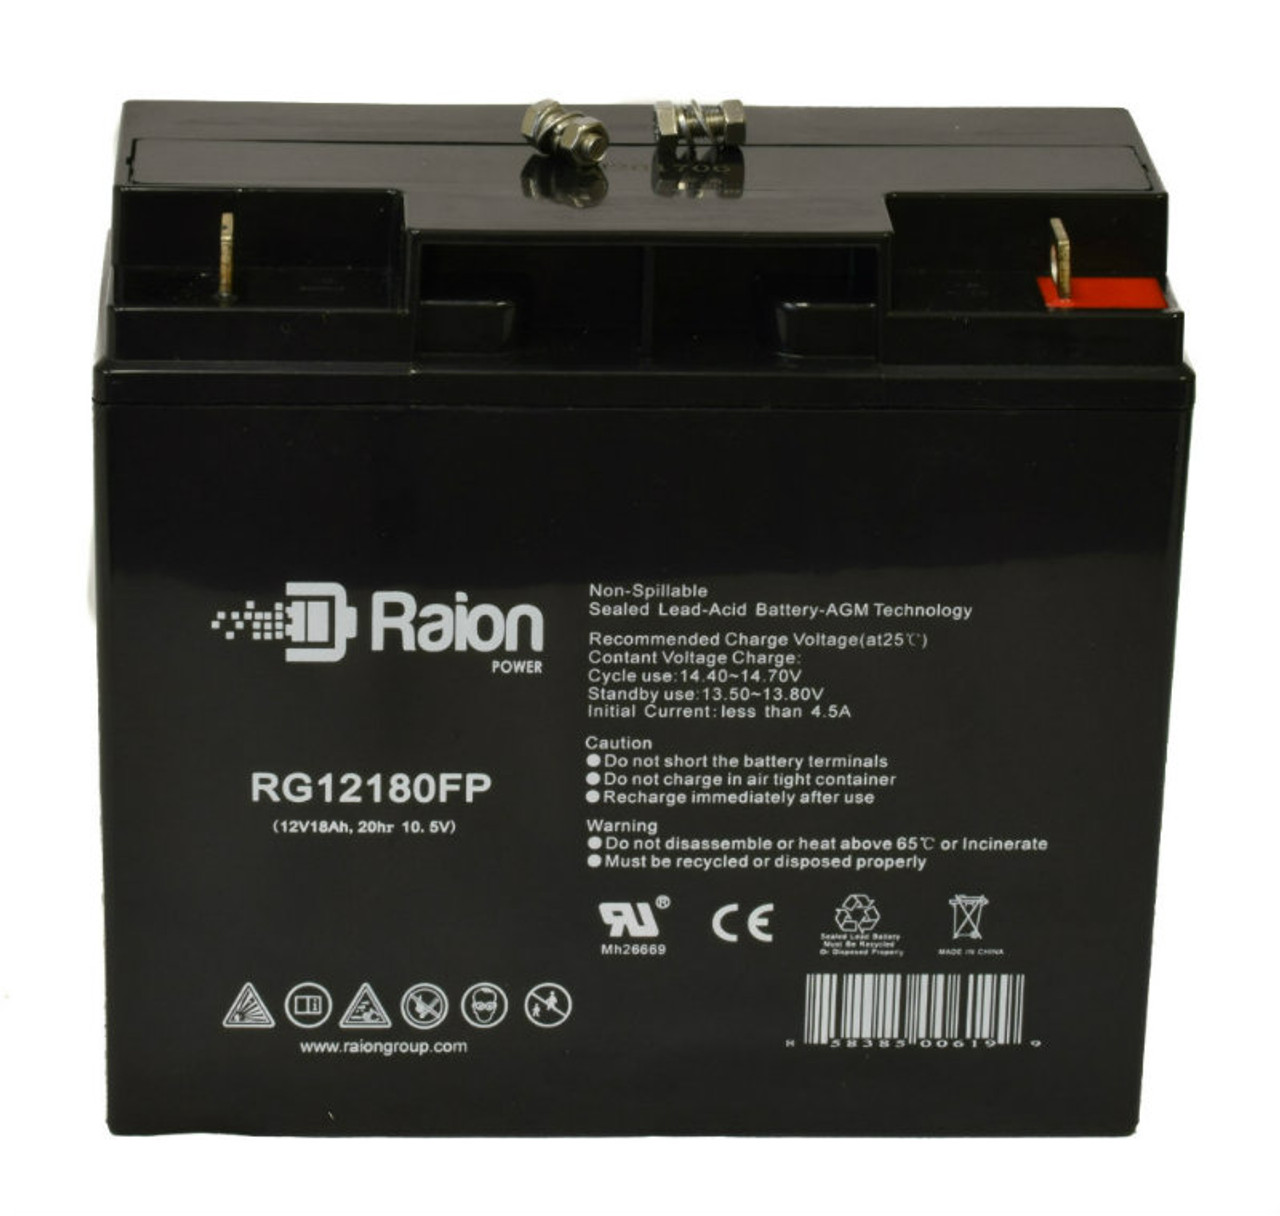 Raion Power RG12180FP 12V 18Ah Lead Acid Battery for Firman 10000 Watt P08004 Generator